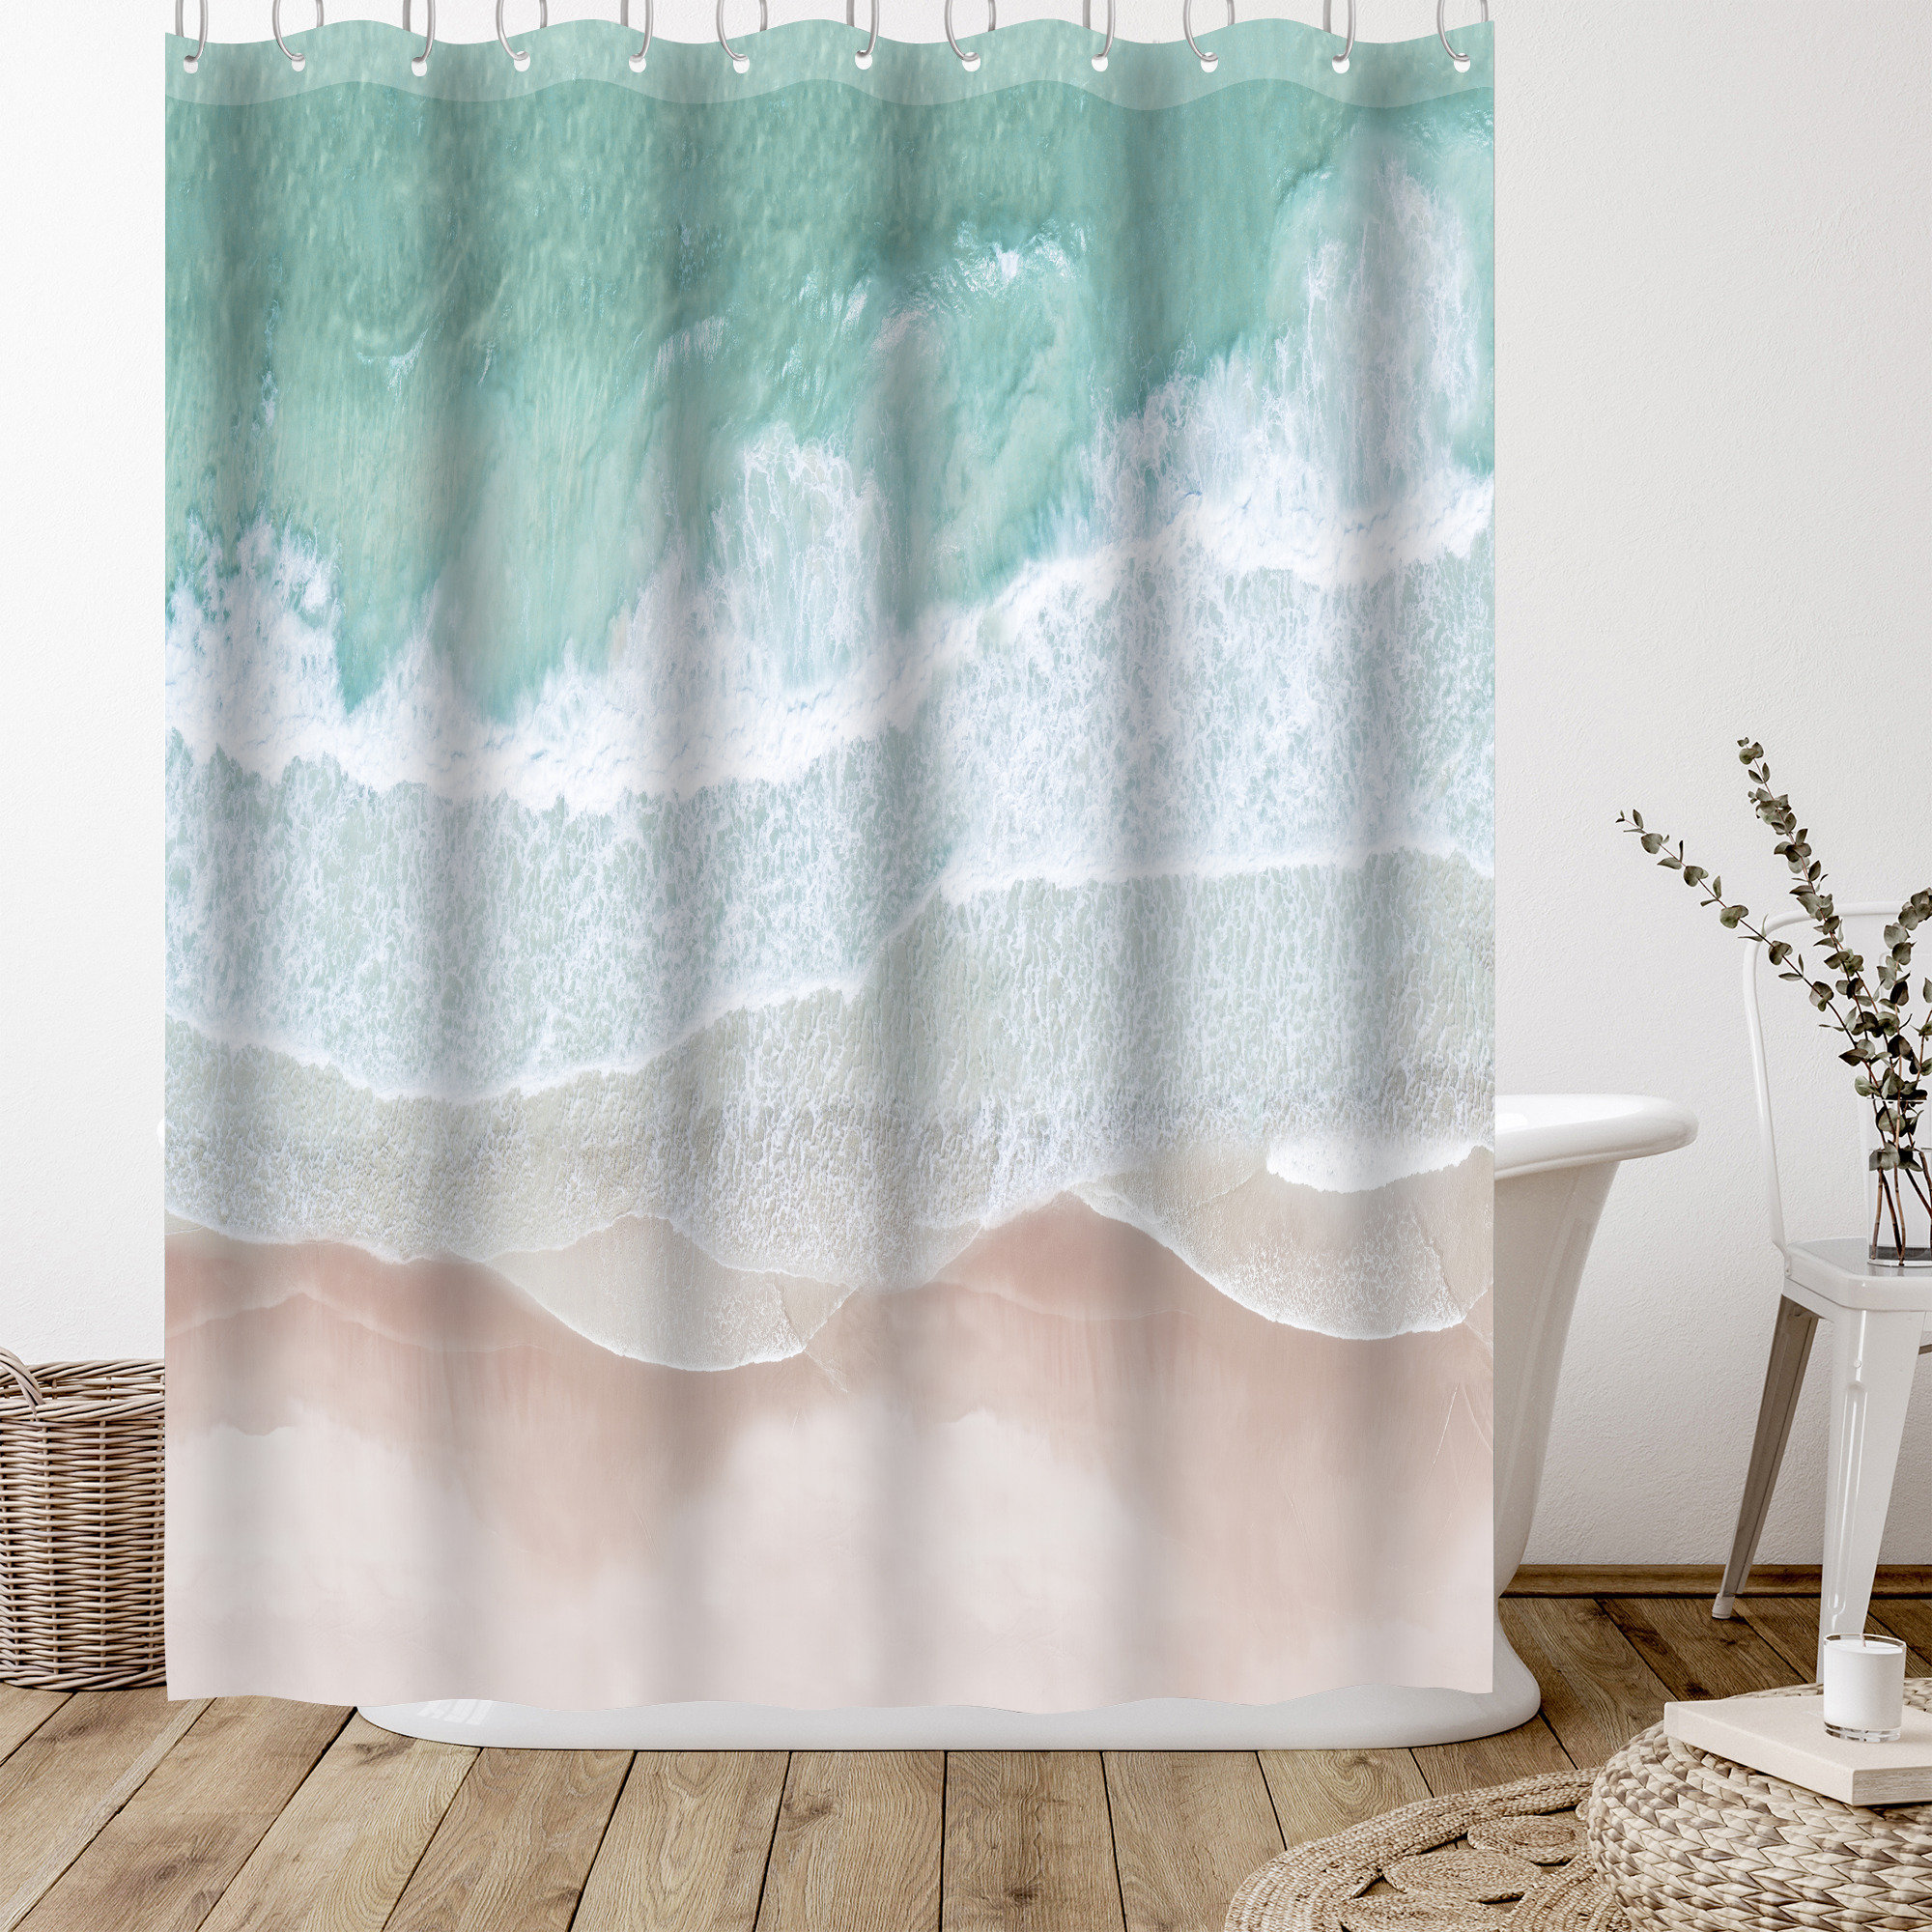 Mermaid Shower Curtain Hooks for Decorative Bathroom - Rust Proof Metal Stainless Steel Curtain Rings, Set of 12 Shower Hook with Ocean Silver